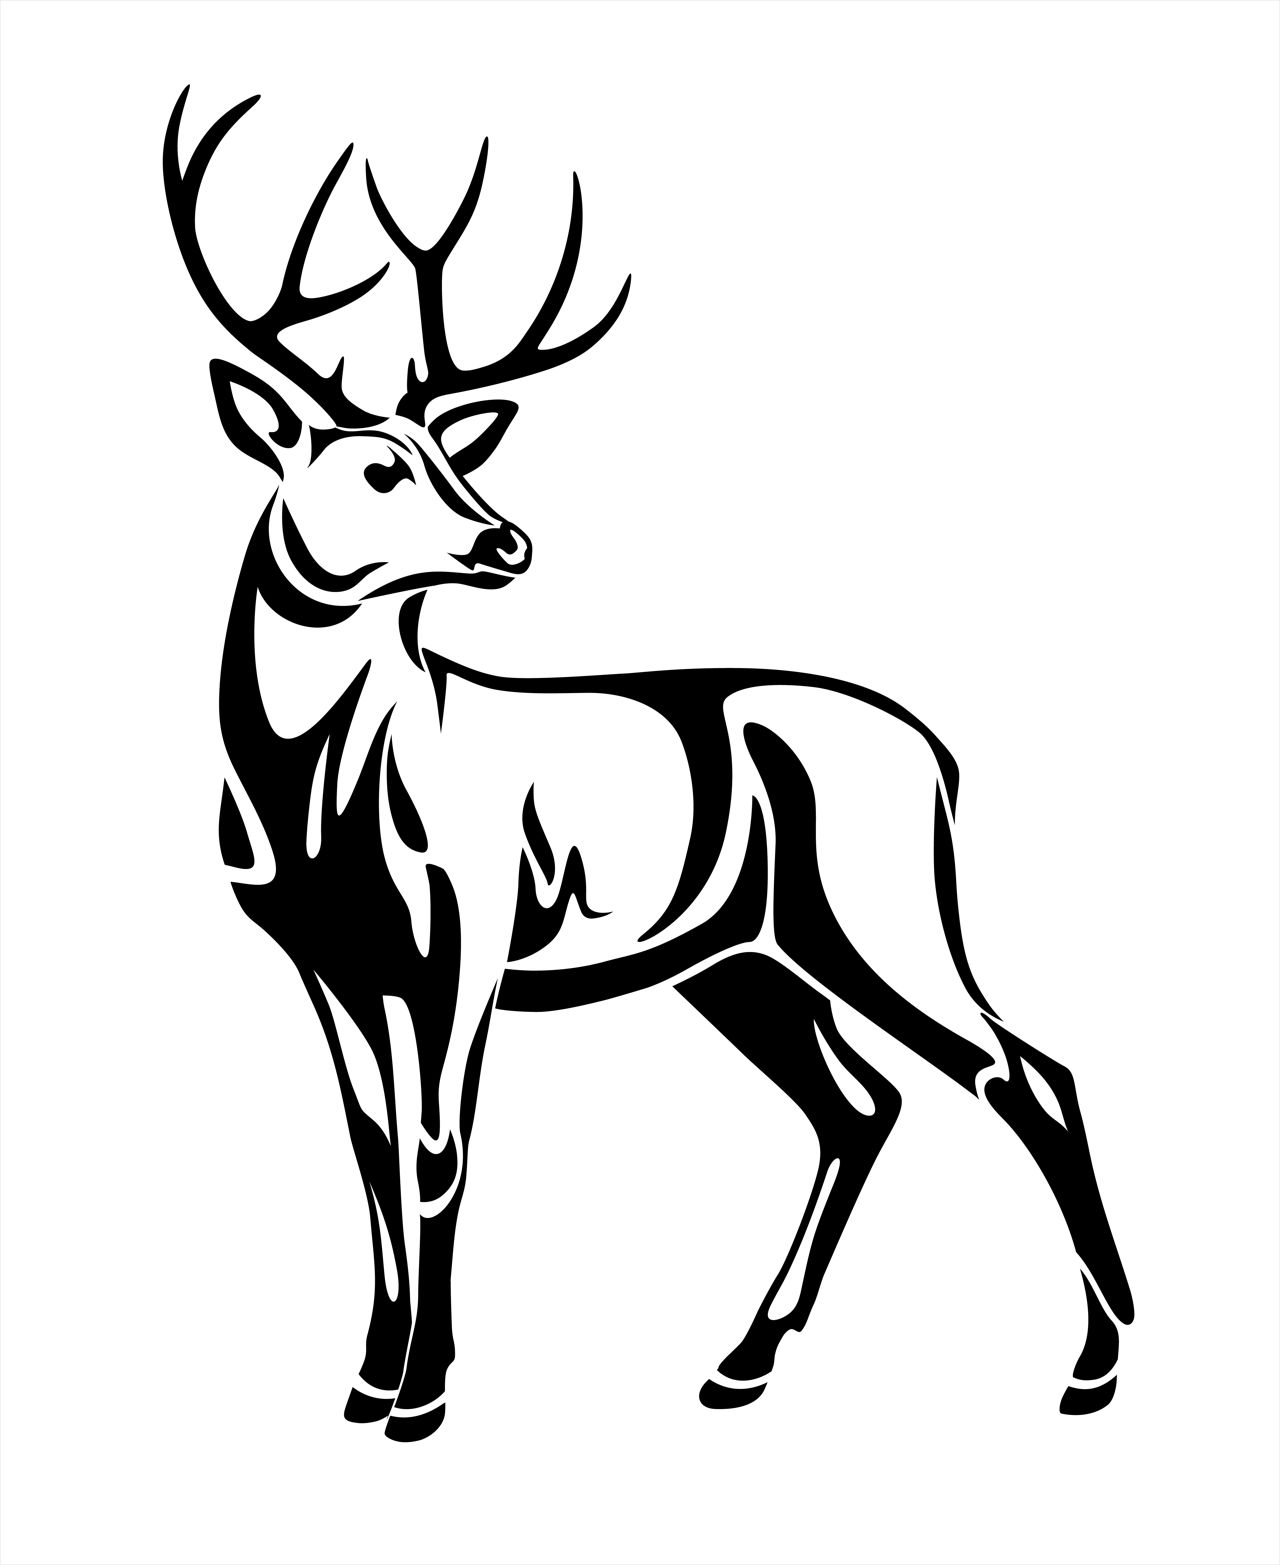 Deer Spirit Animal: What Does it Symbolize? - Mysticurious